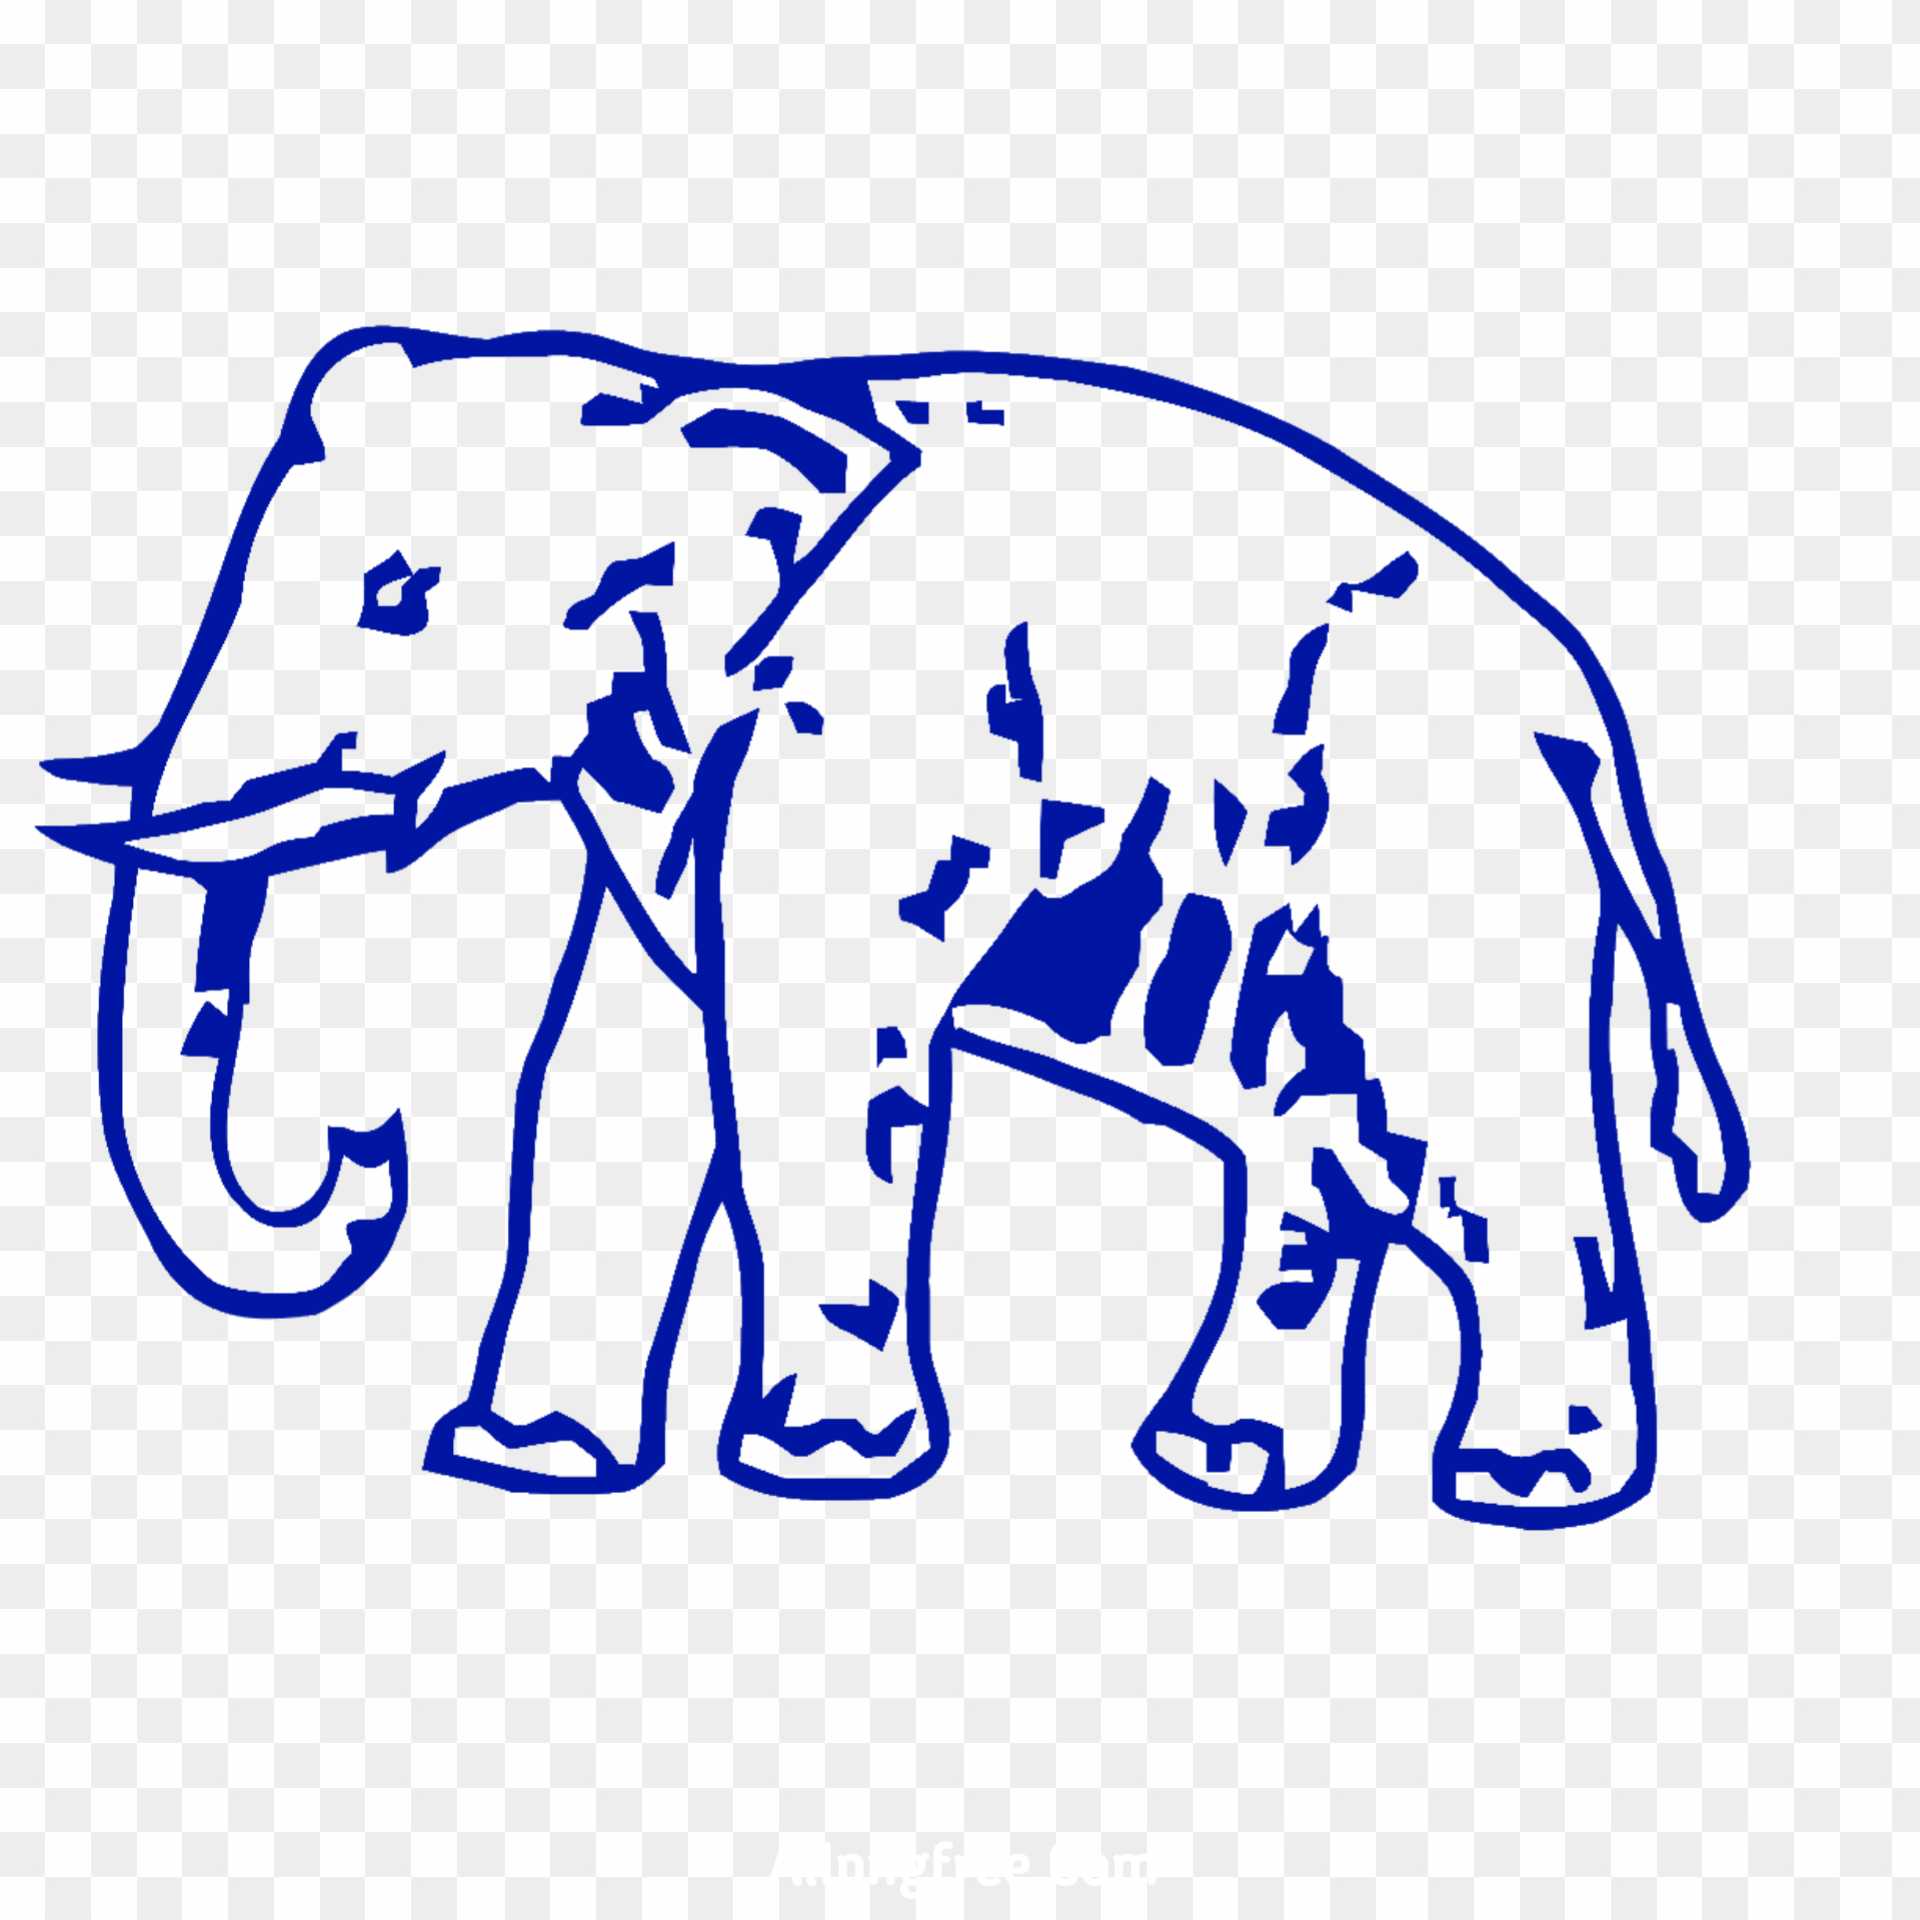 Elephant logo png clipart image 